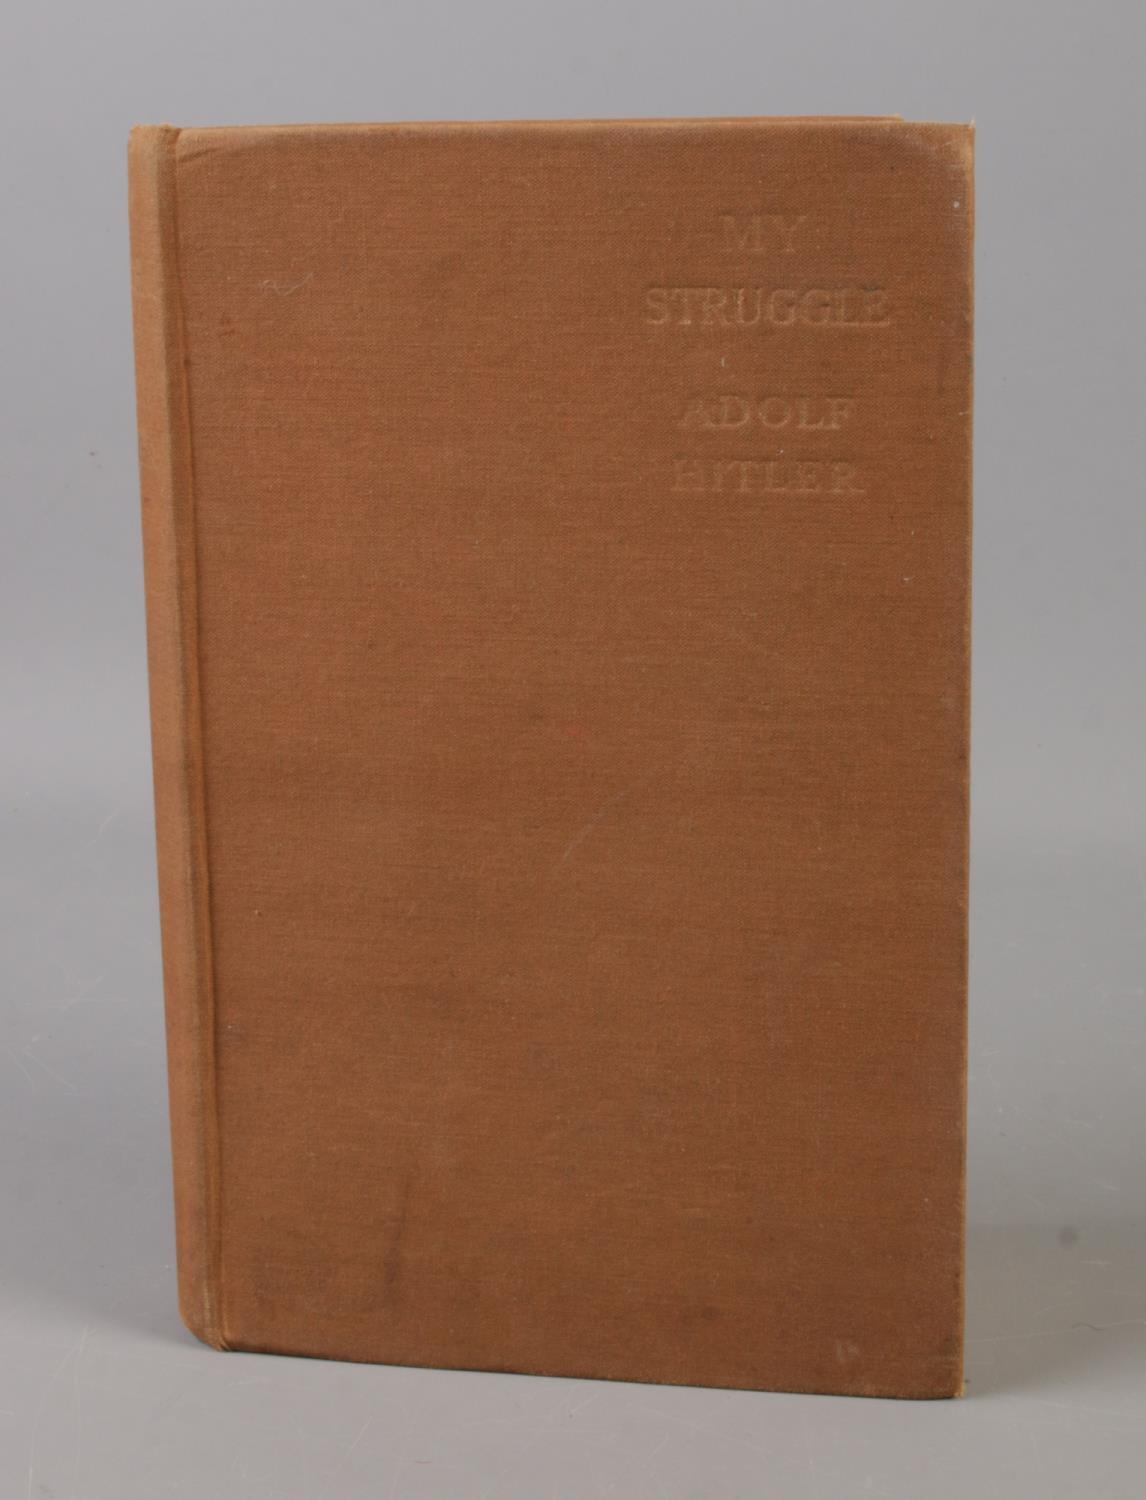 A Library Edition 1938 Hardback copy of Adolf Hitler, My Struggle (Mein Kampf). Fair Condition.